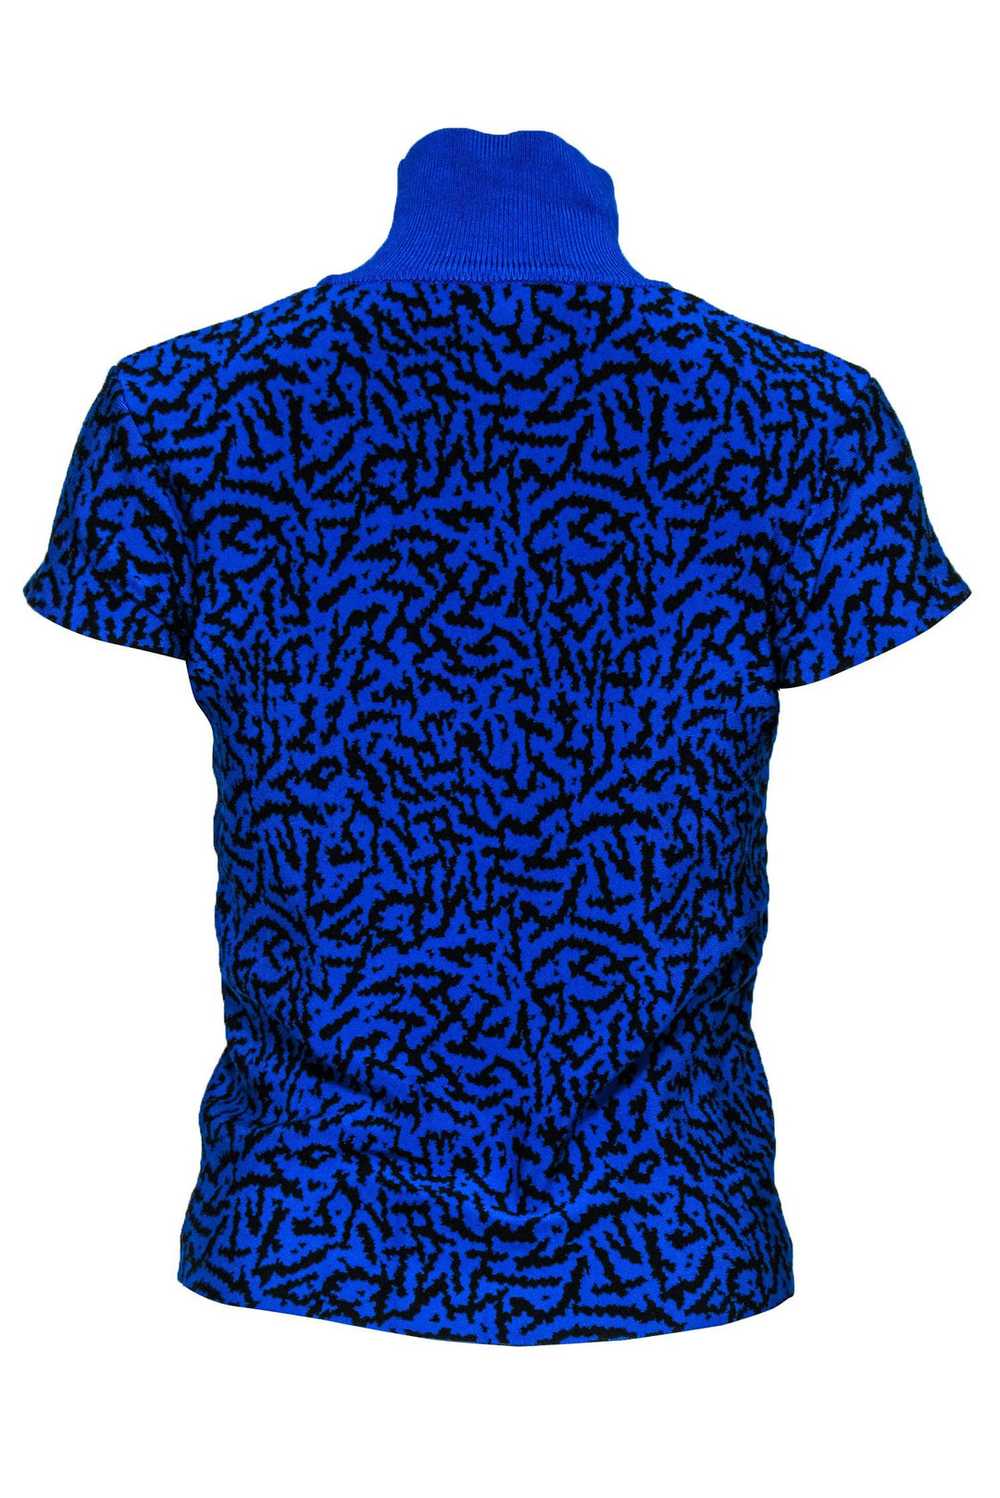 Issa London - Cobalt Blue & Black Printed Short S… - image 3